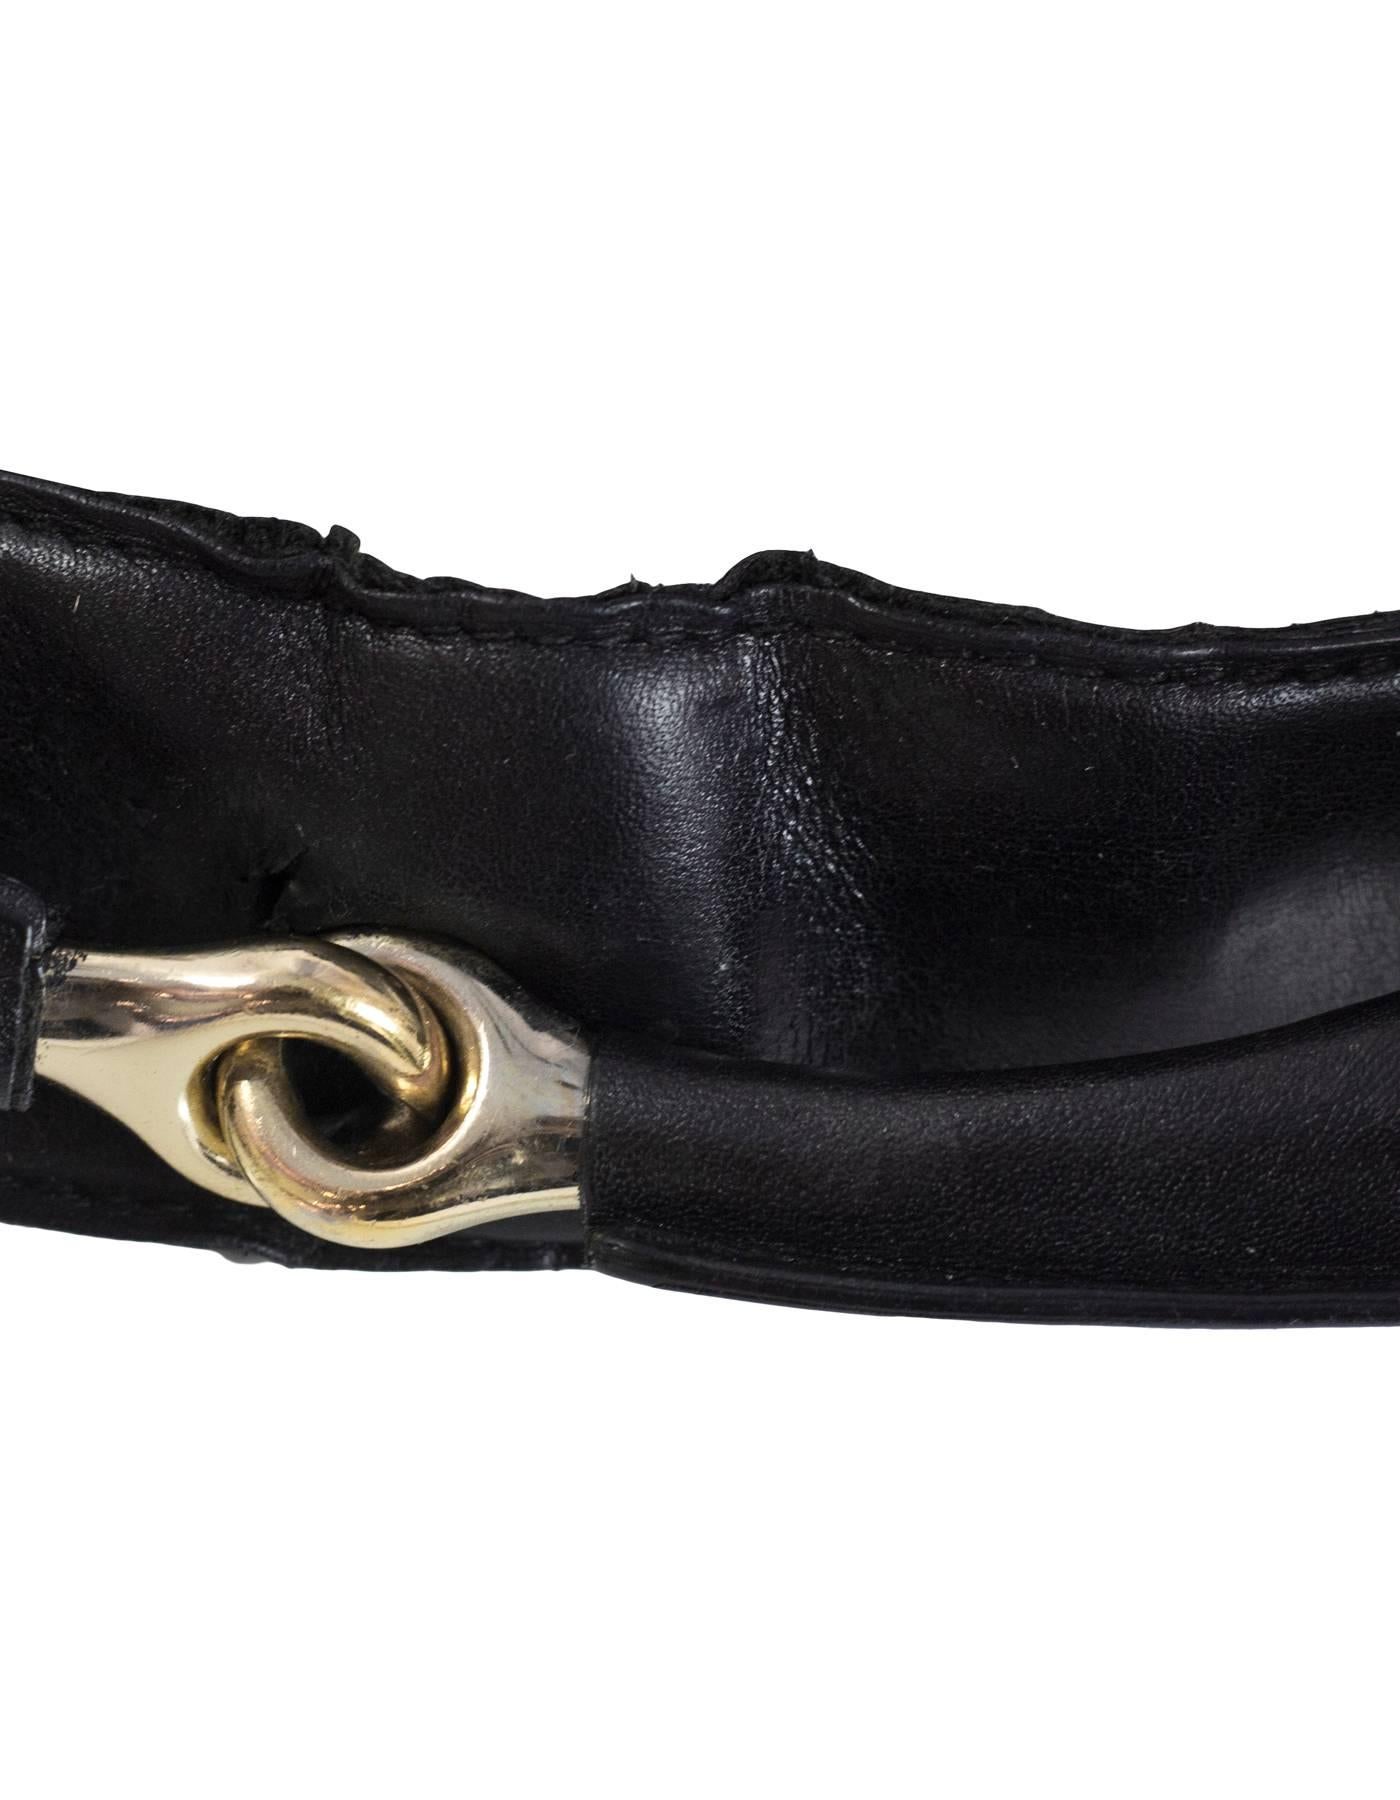 Gucci Black Leather Horsebit Hobo Bag 2